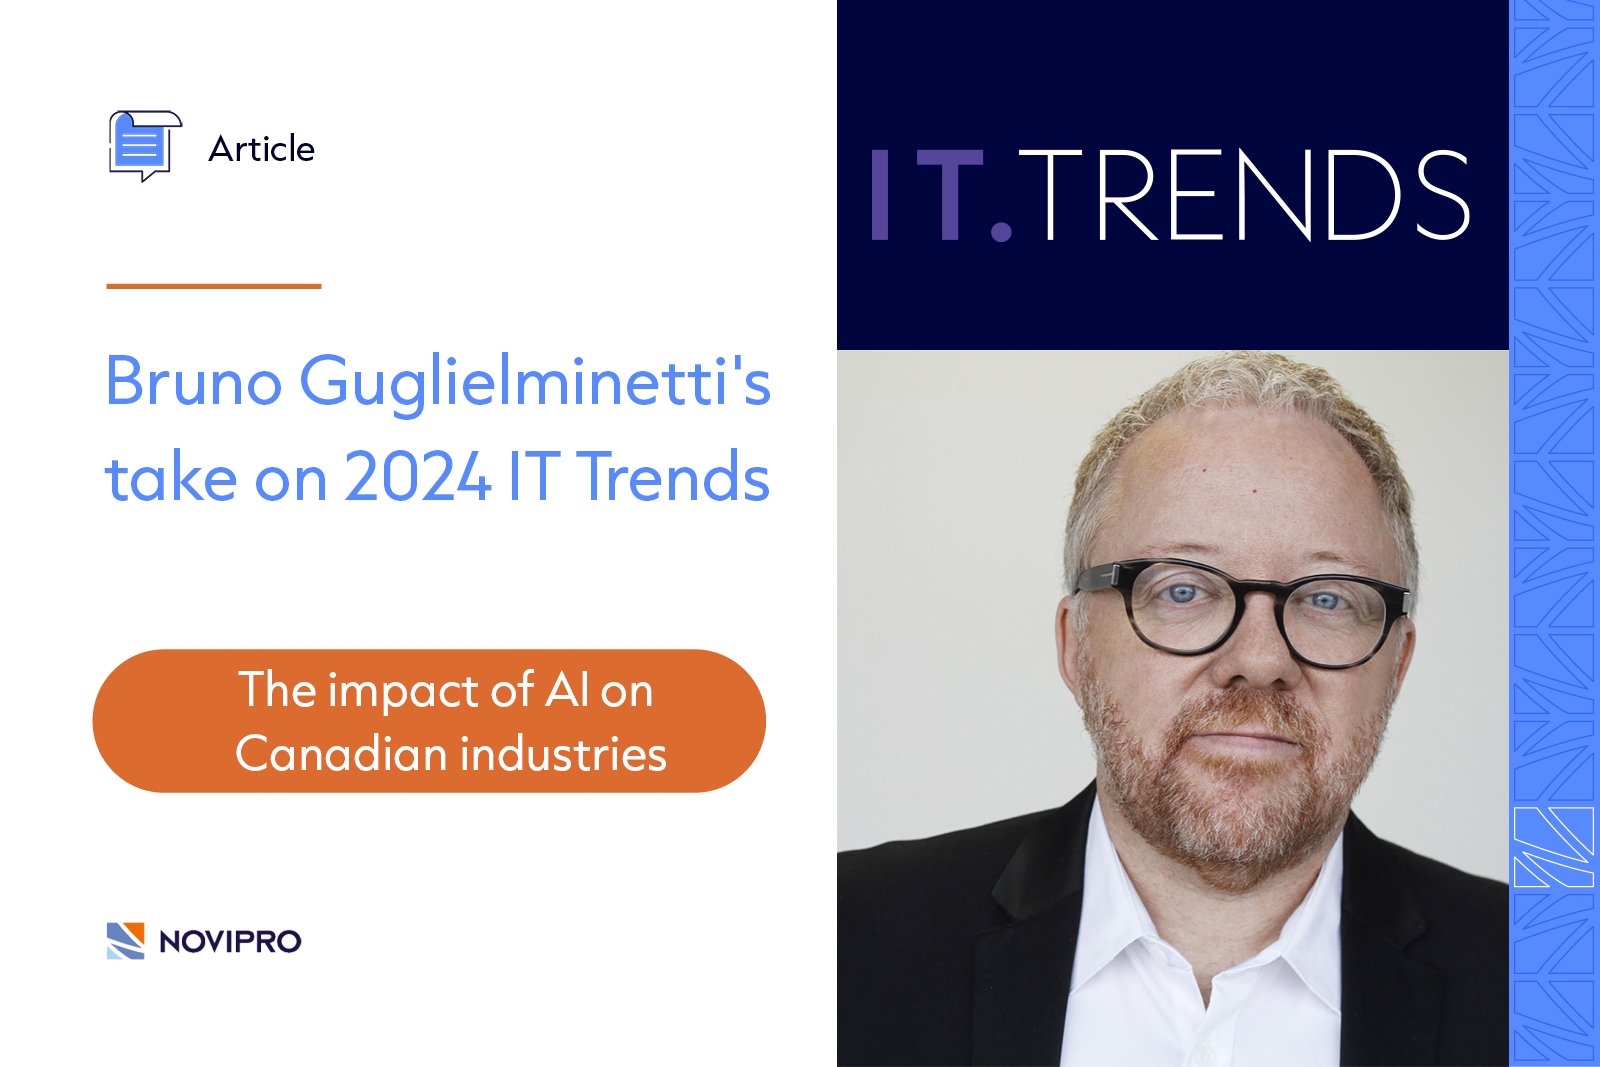 Bruno Guglielminetti's take on 2024 IT Trends by NOVIPRO